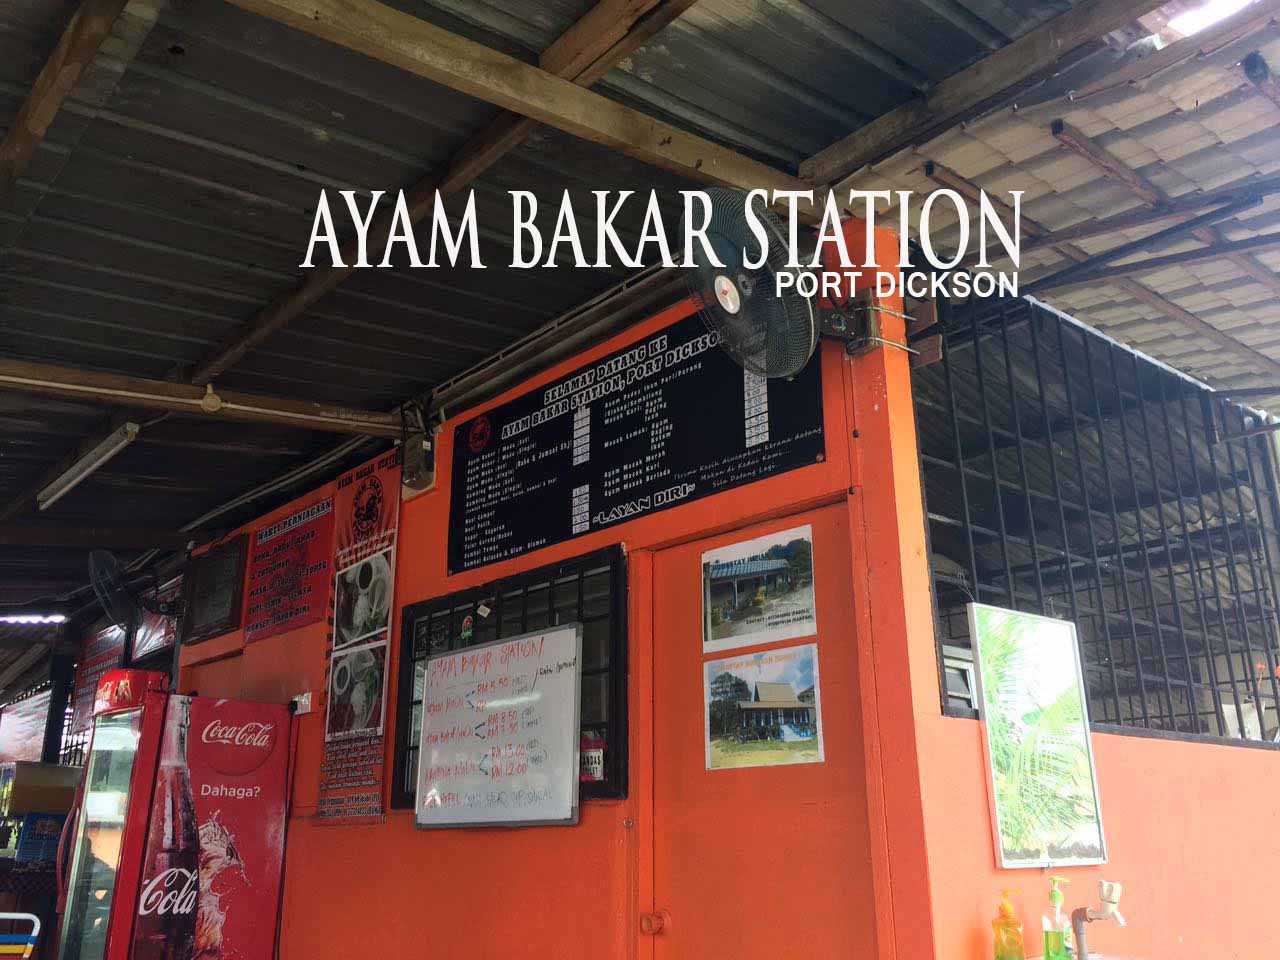 Ayam Bakar Station, Port Dickson.